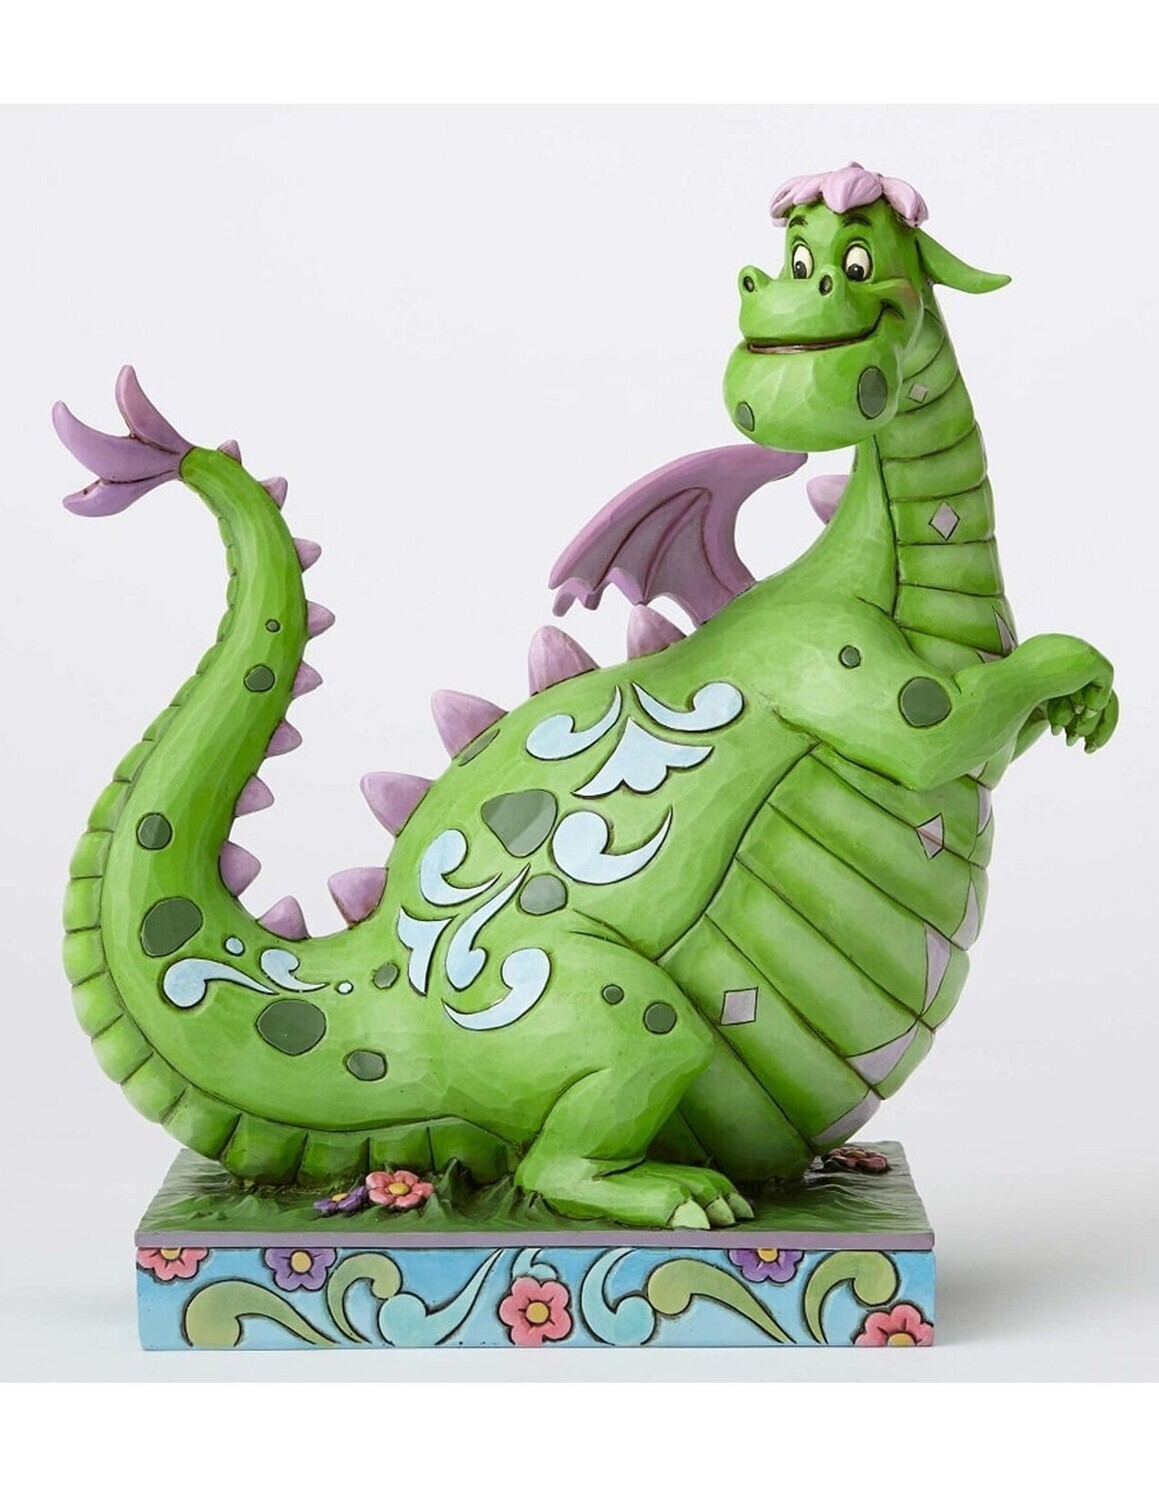 Jim Shore Disney Traditions Collection "Pete's Dragon" A boy’s Best Friend Figurine (4054277)